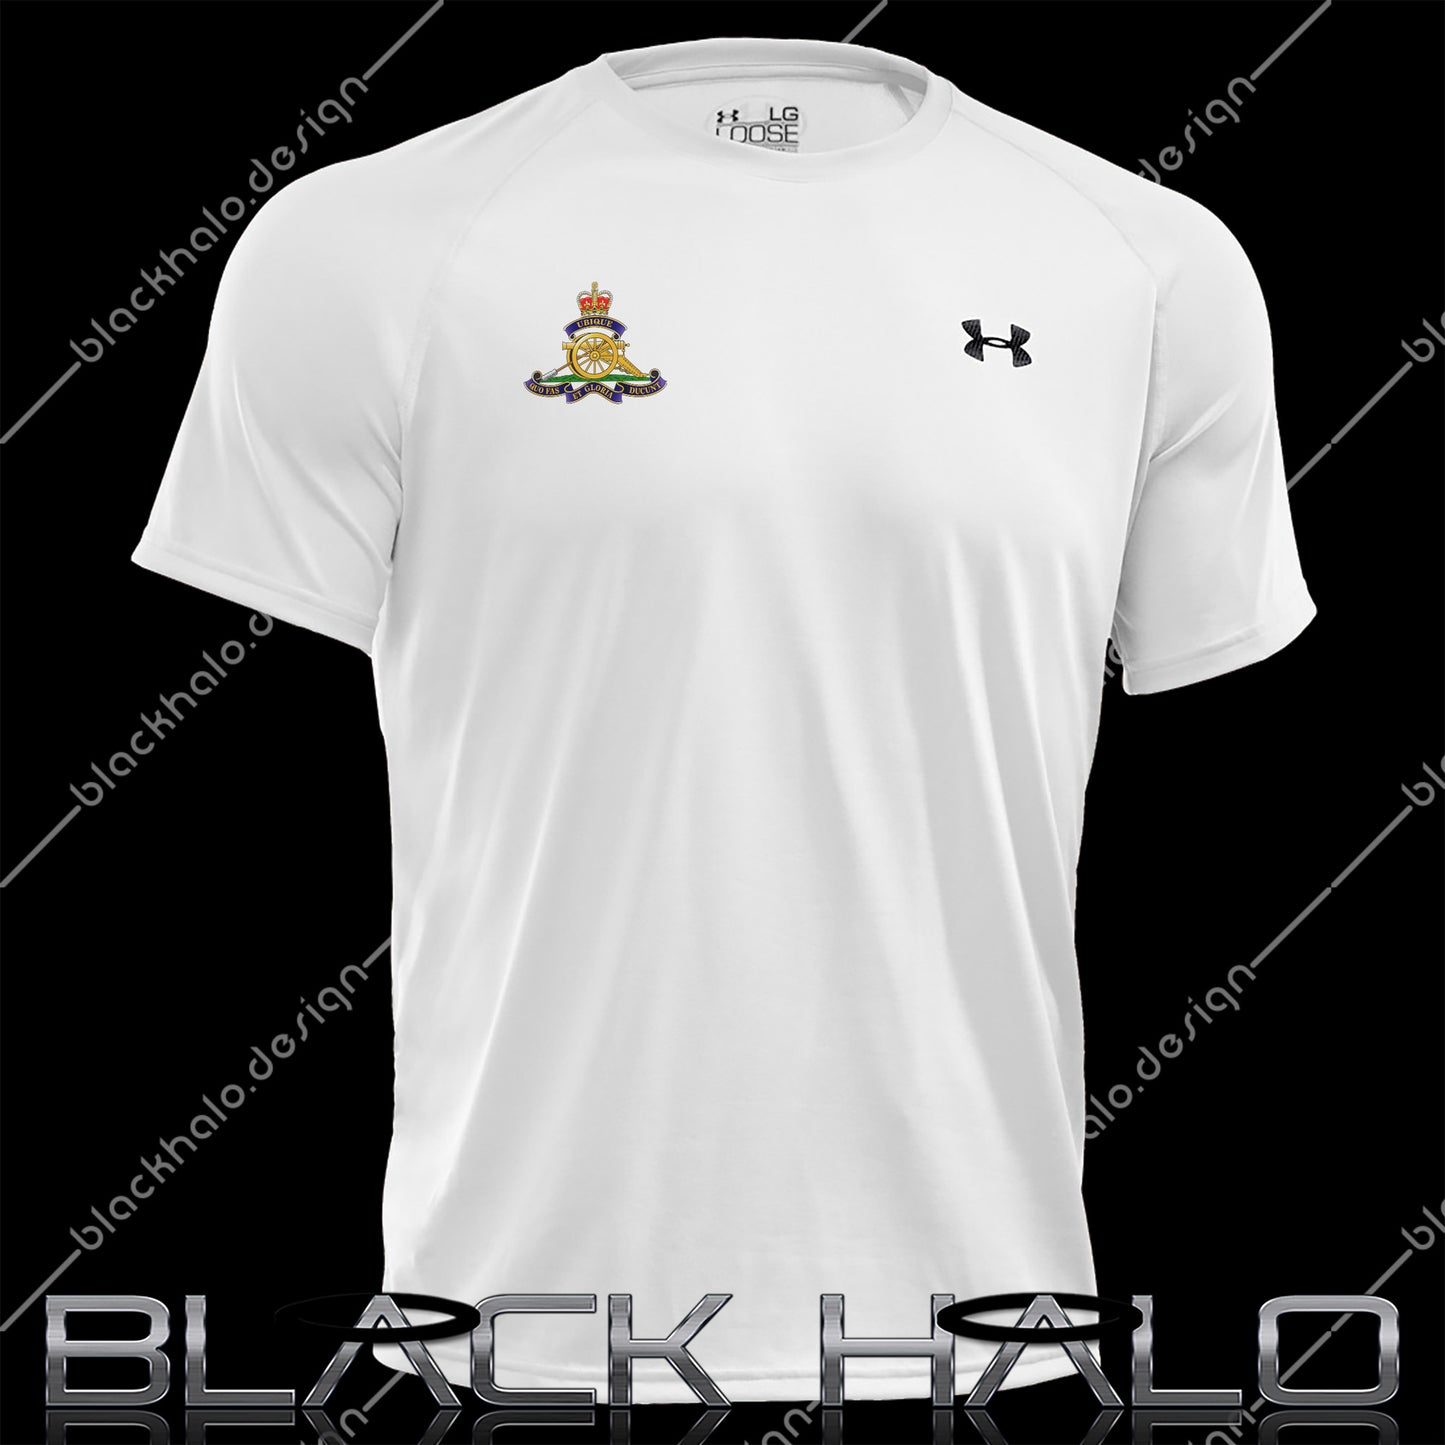 The Royal Regiment of Artillery Men's Under Armour UA Tech™ Short Sleeve T-Shirt (White) - Black Halo Design
